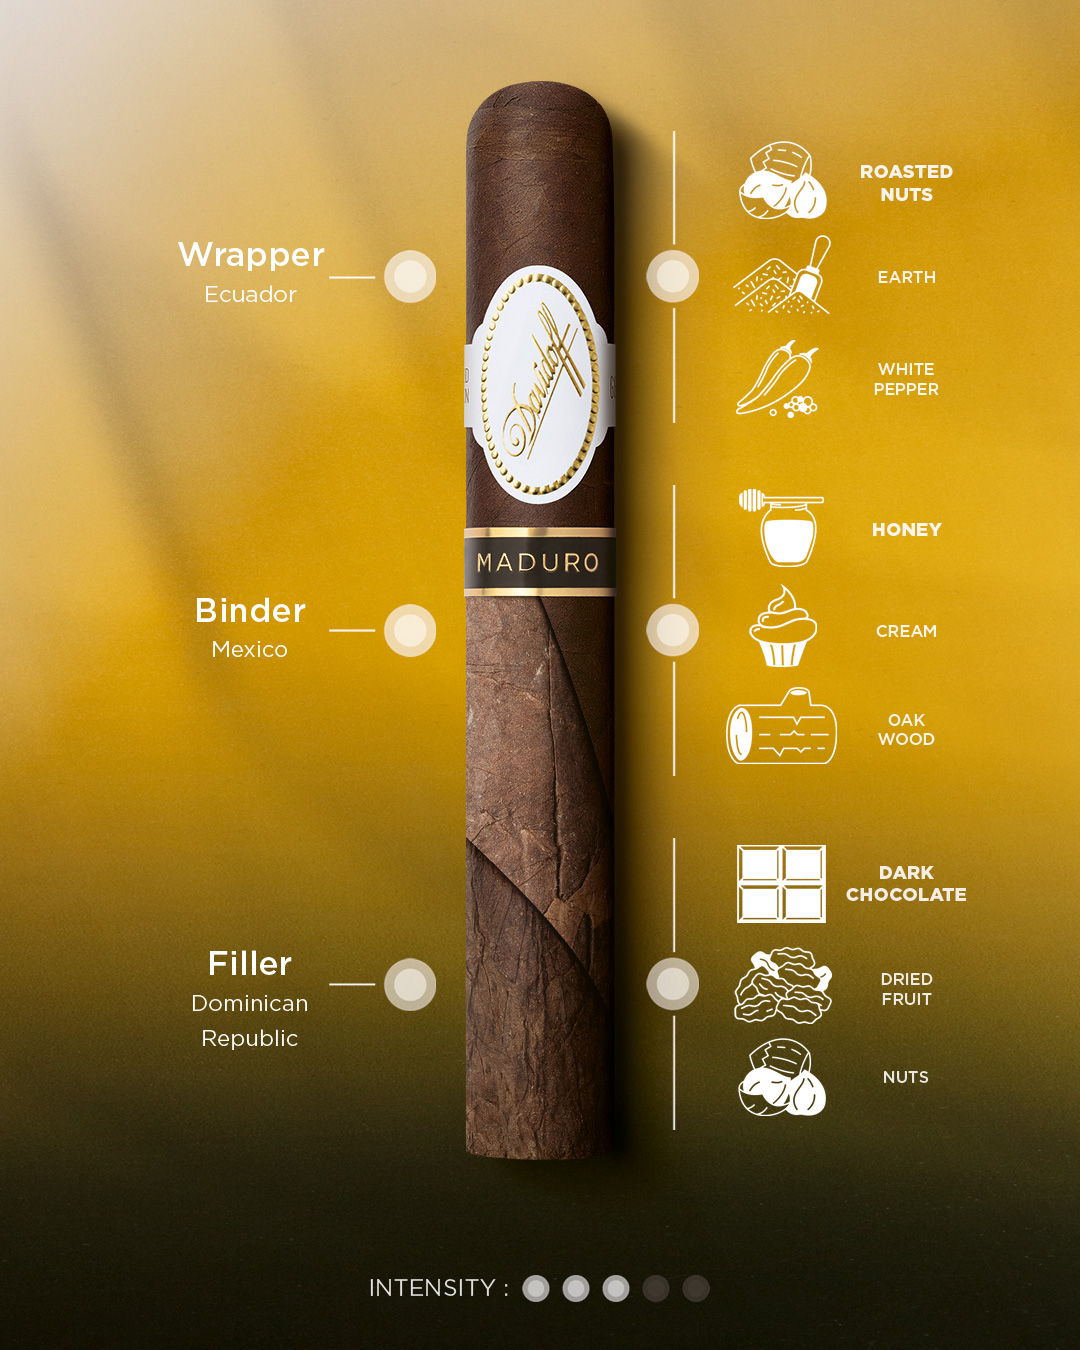 Taste banner of the Davidoff Maduro cigar including tobacco origin, intensity and main aromas.